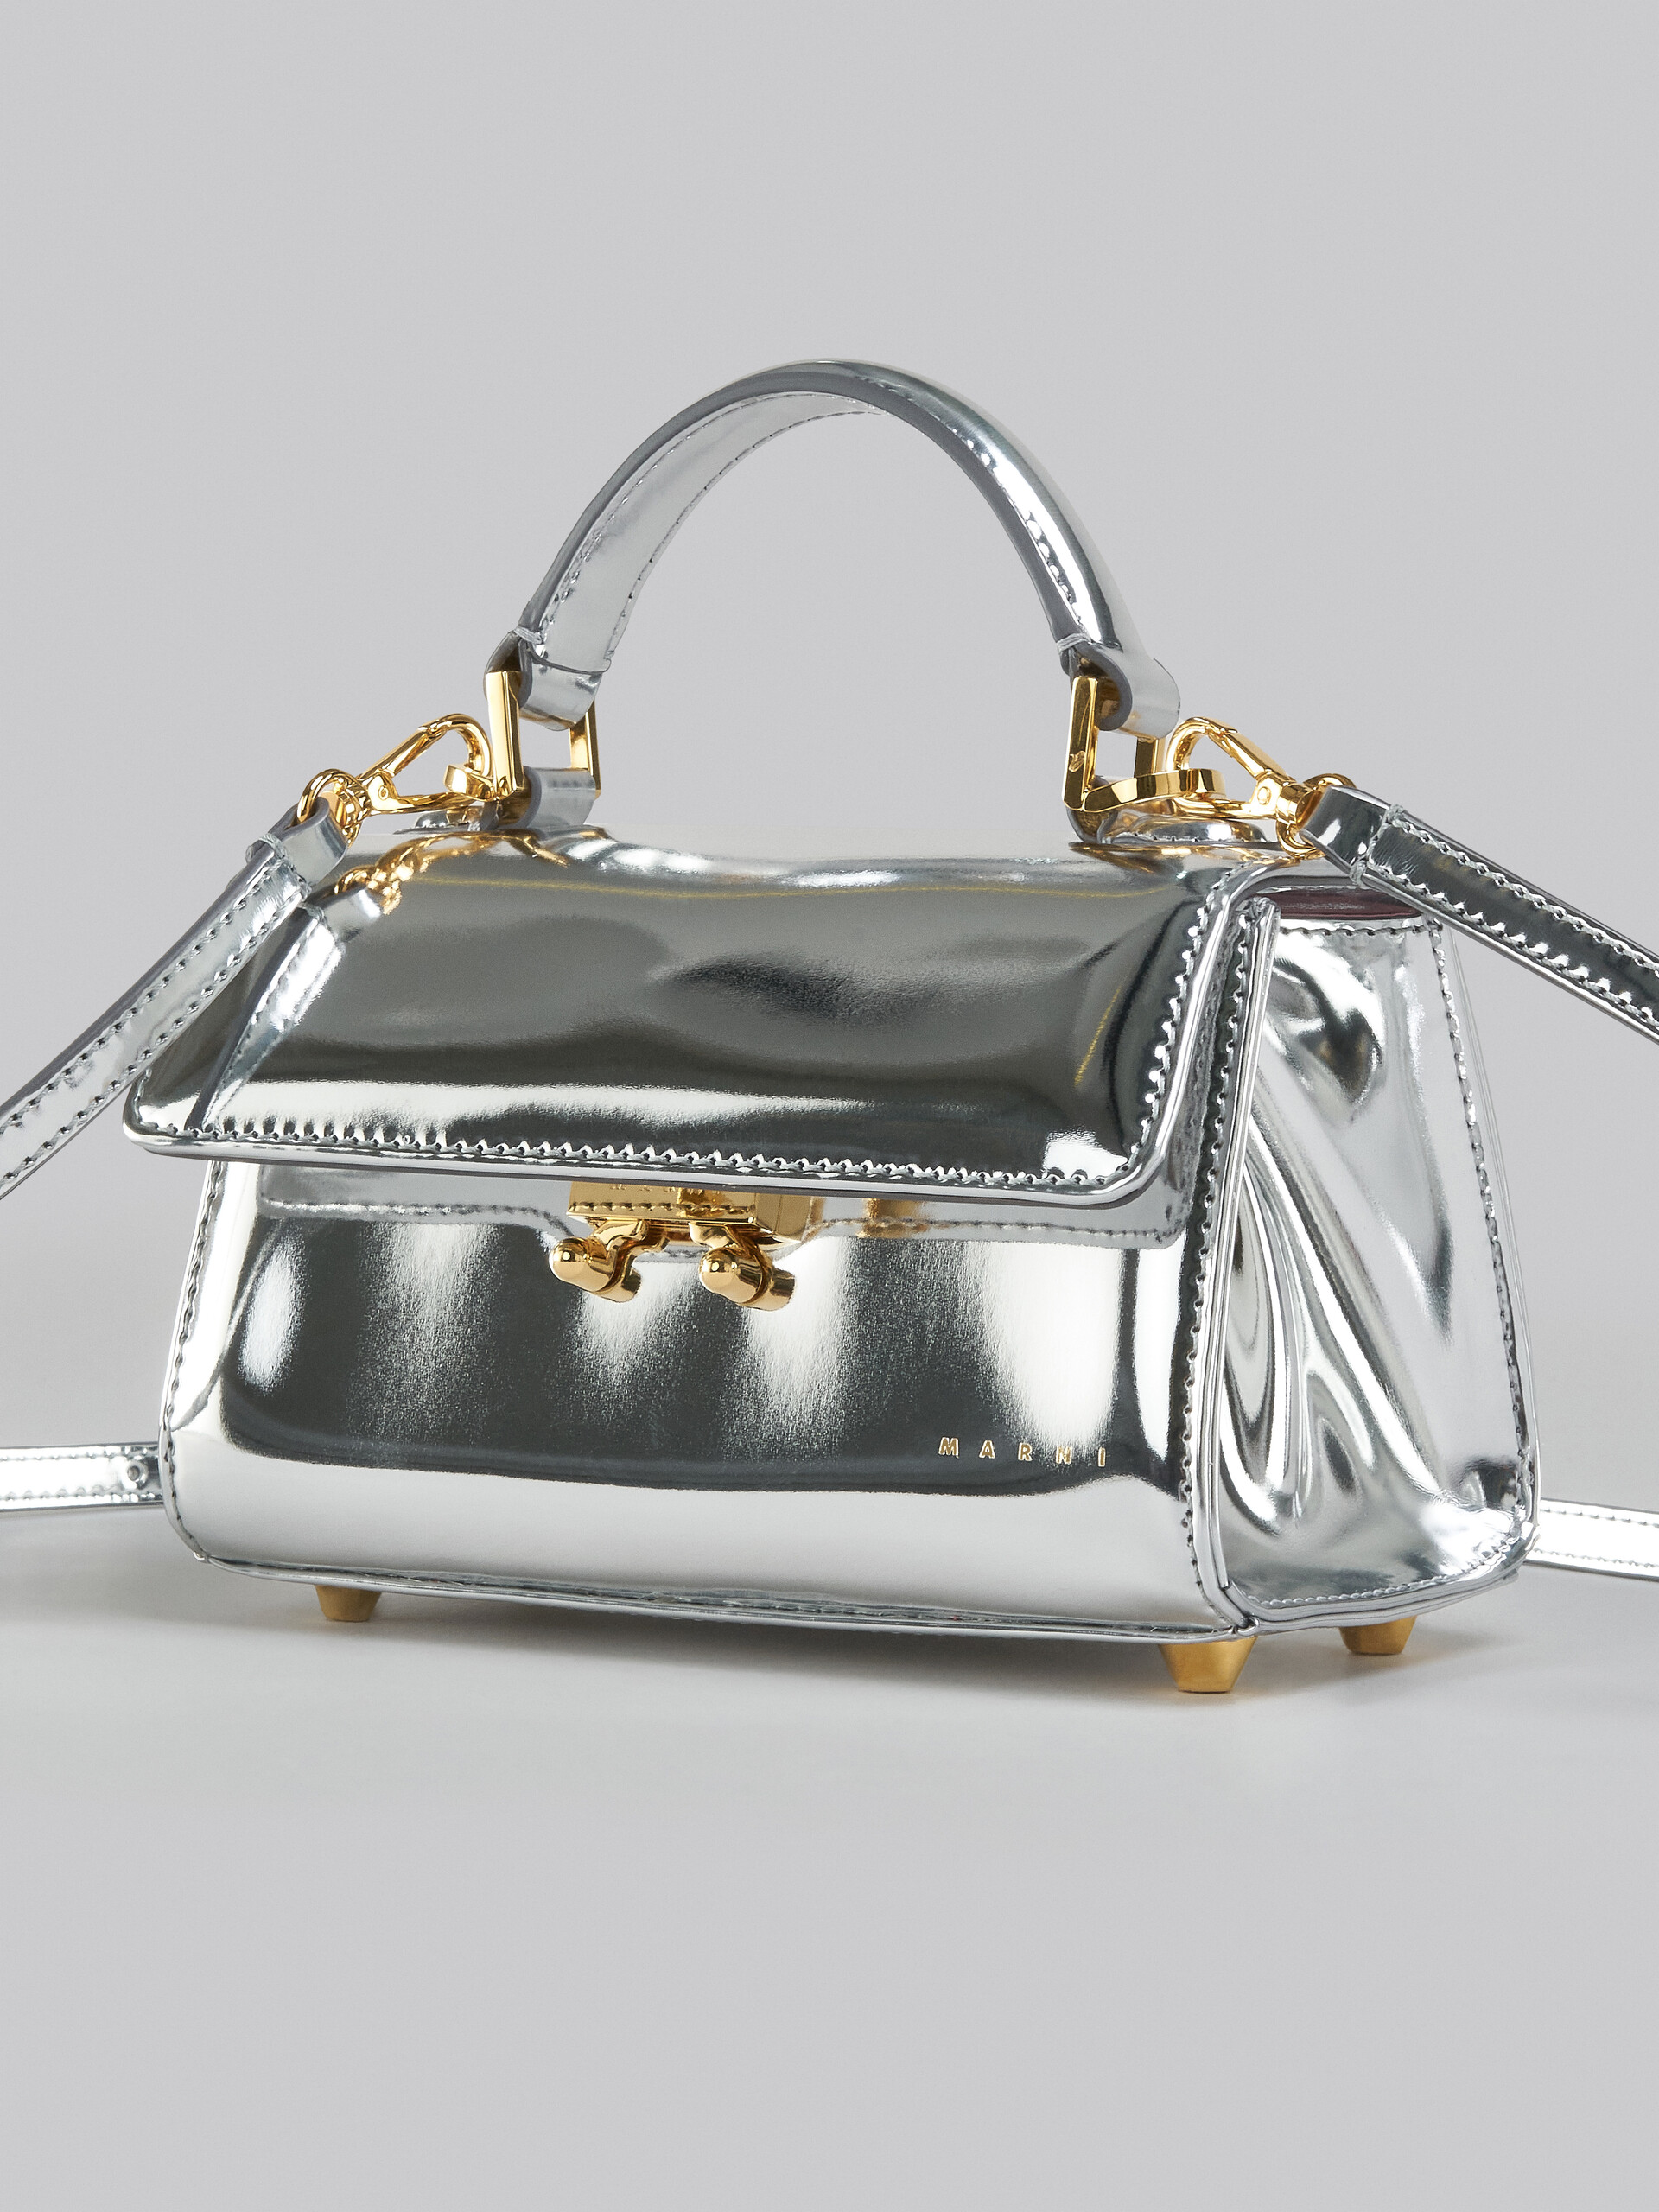 Relativity Mini Bag in silver mirrored leather - Handbags - Image 5